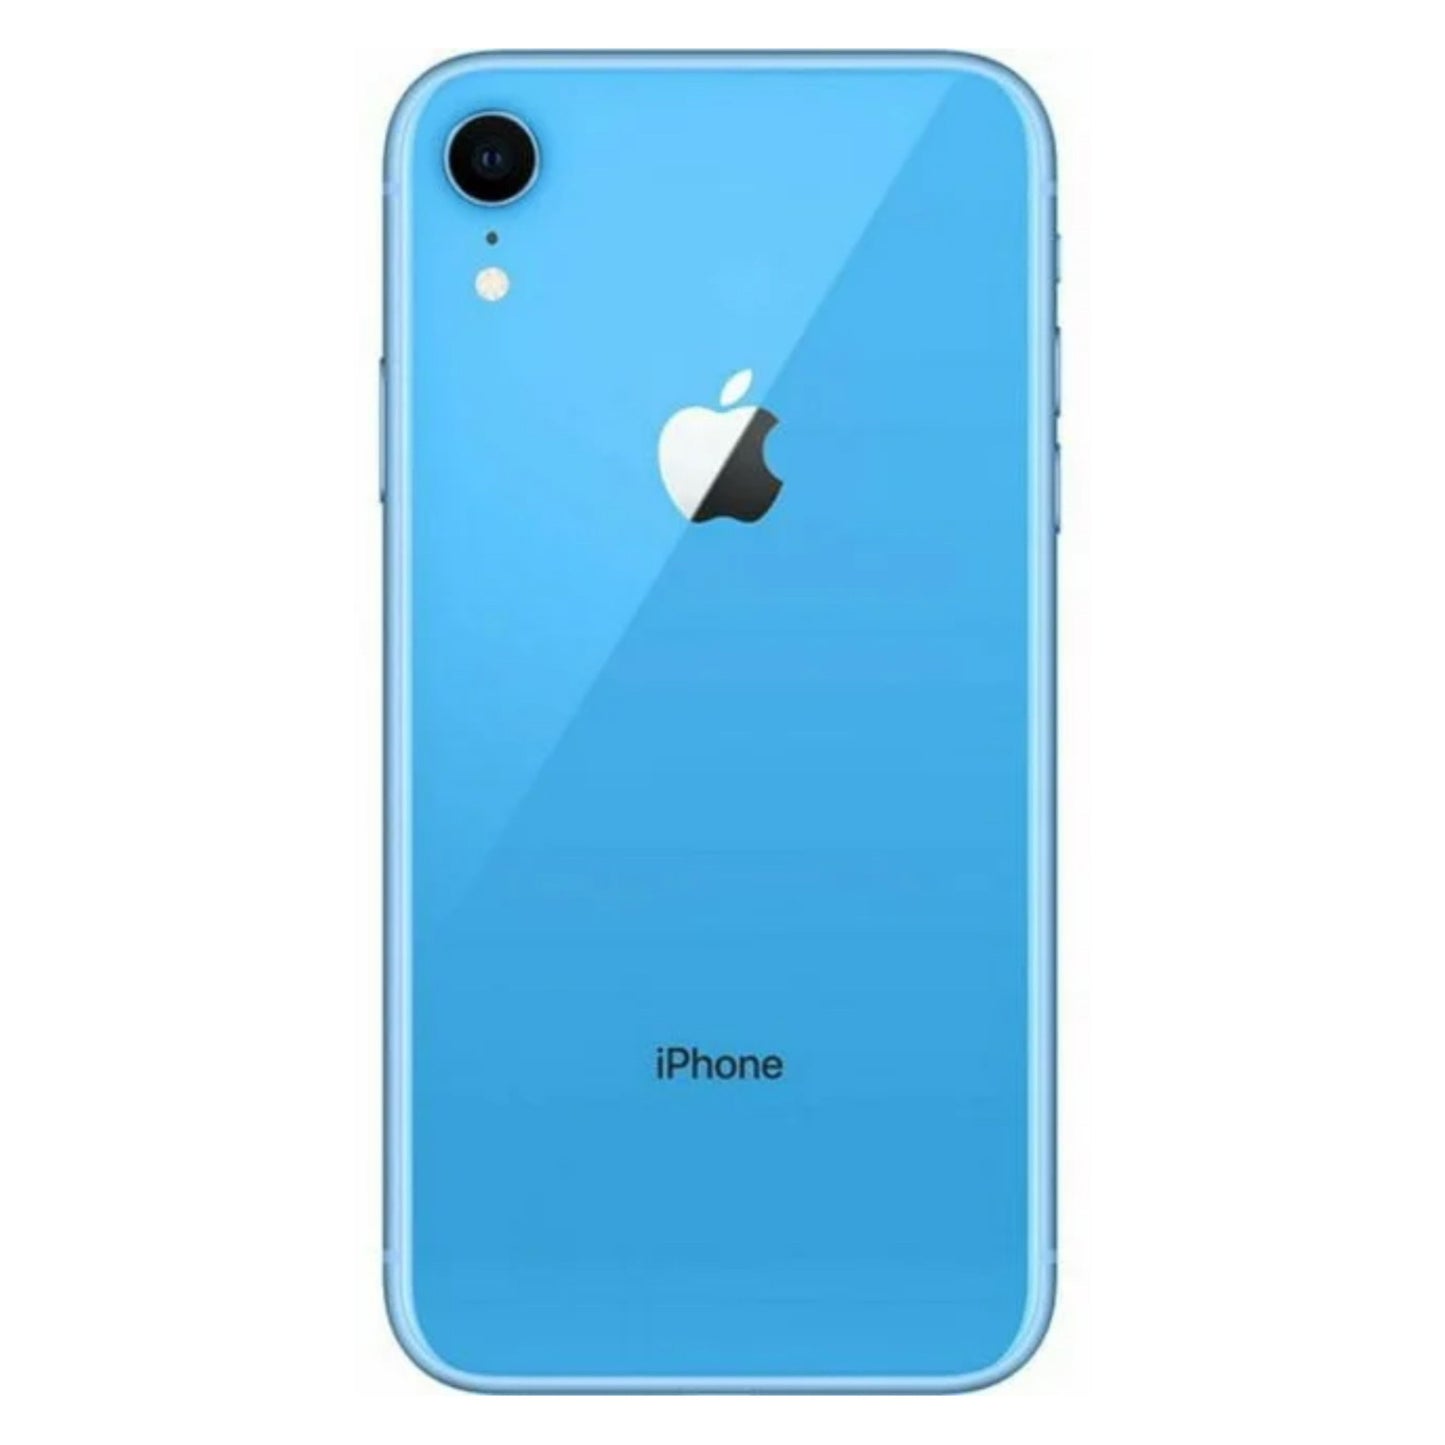 iPhone XR Blue 256GB (Unlocked) Pre-Owned